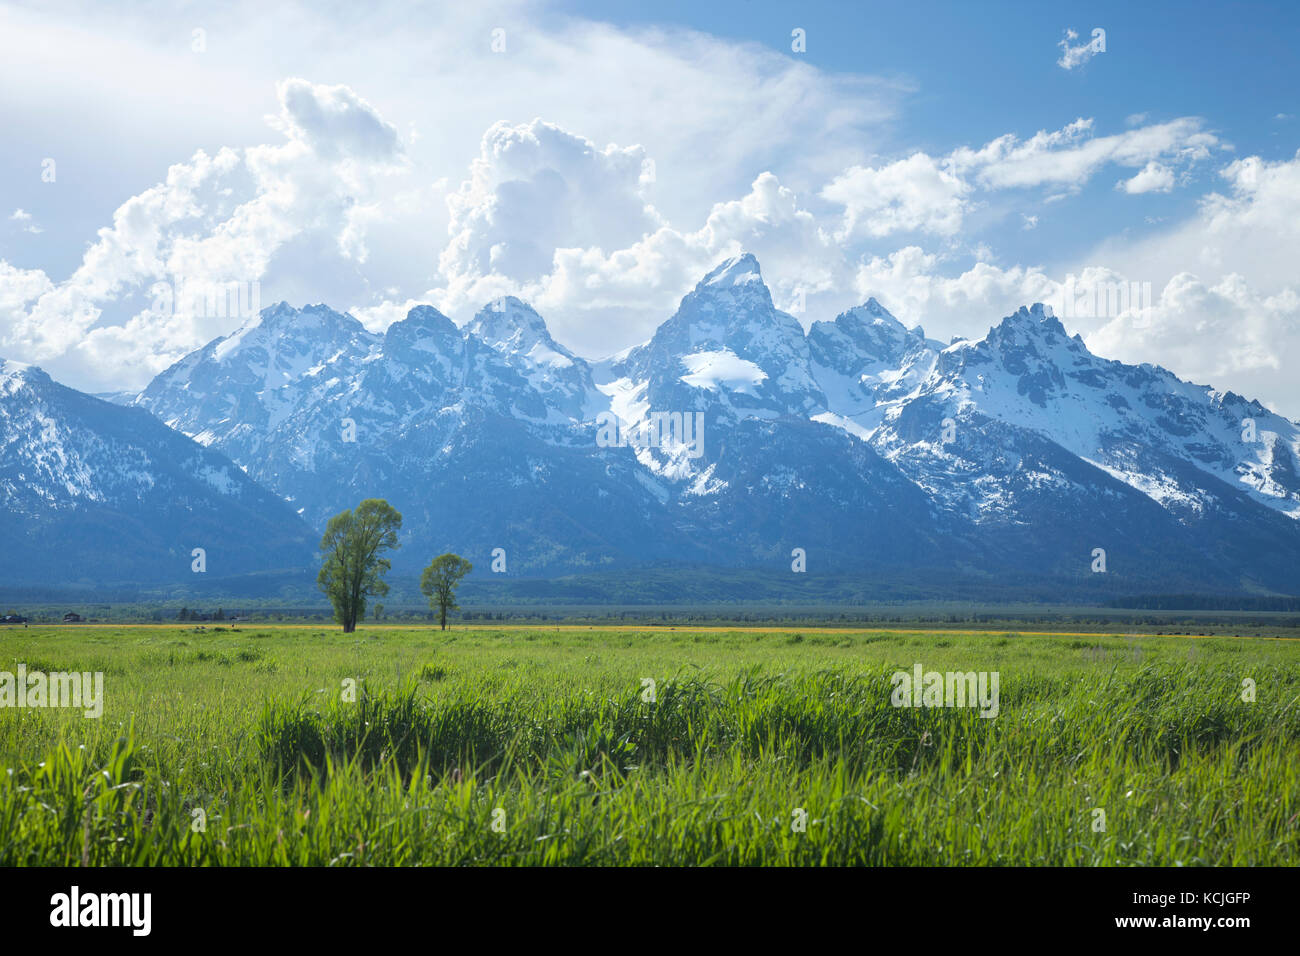 Grand Teton mountain range above grassy fields in Wyoming, USA Stock Photo